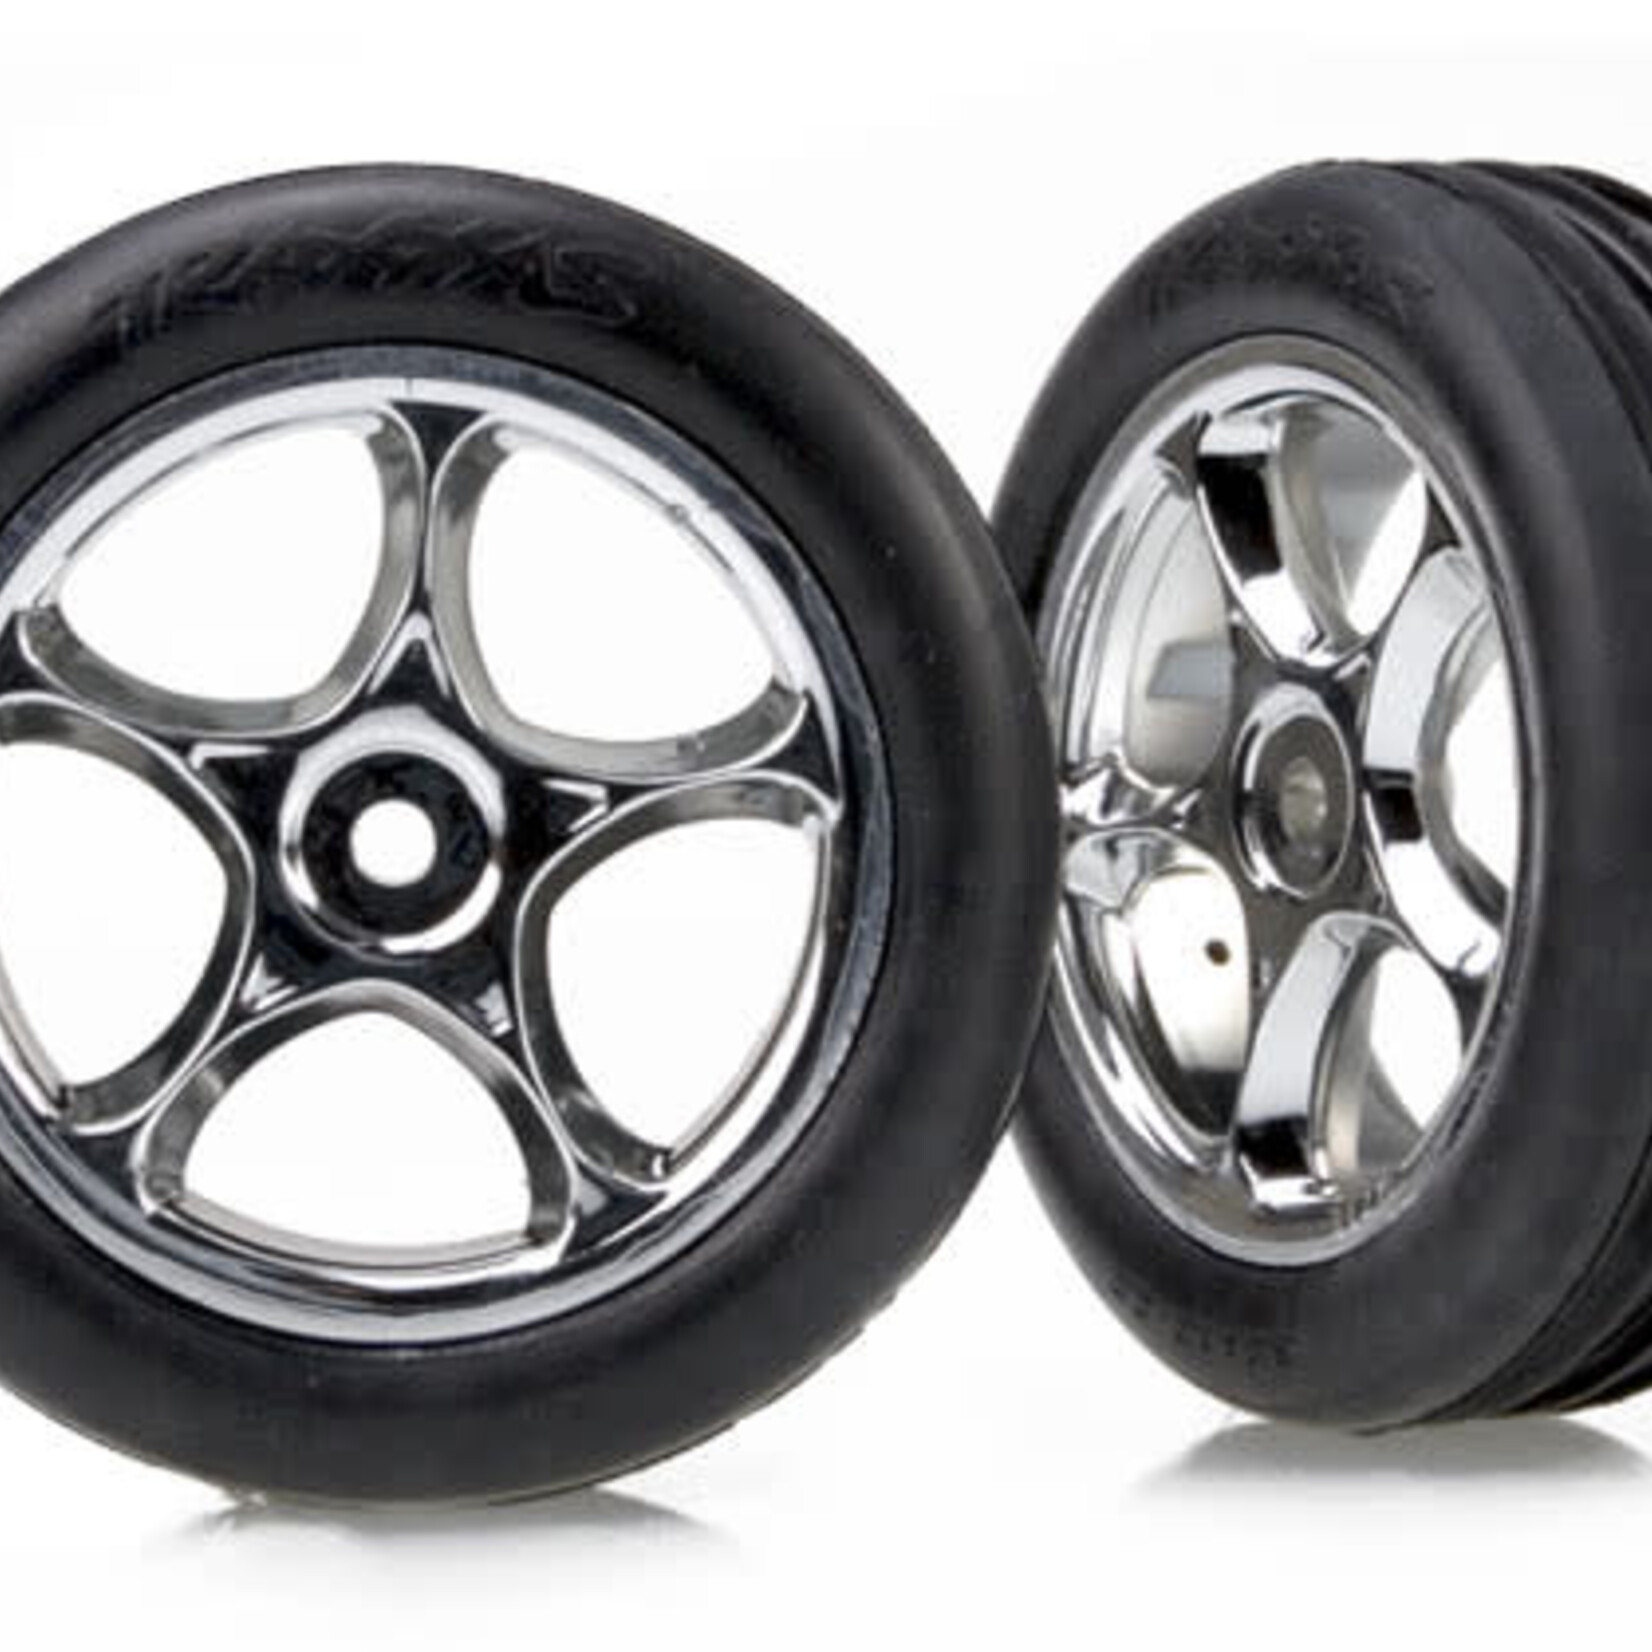 Traxxas Traxxas 2471R Tires & Wheels Tracer 2.2" Chrome wheels Alias Ribbed Tires Bandit Front Medium Compound w/ Foam Inserts (2)